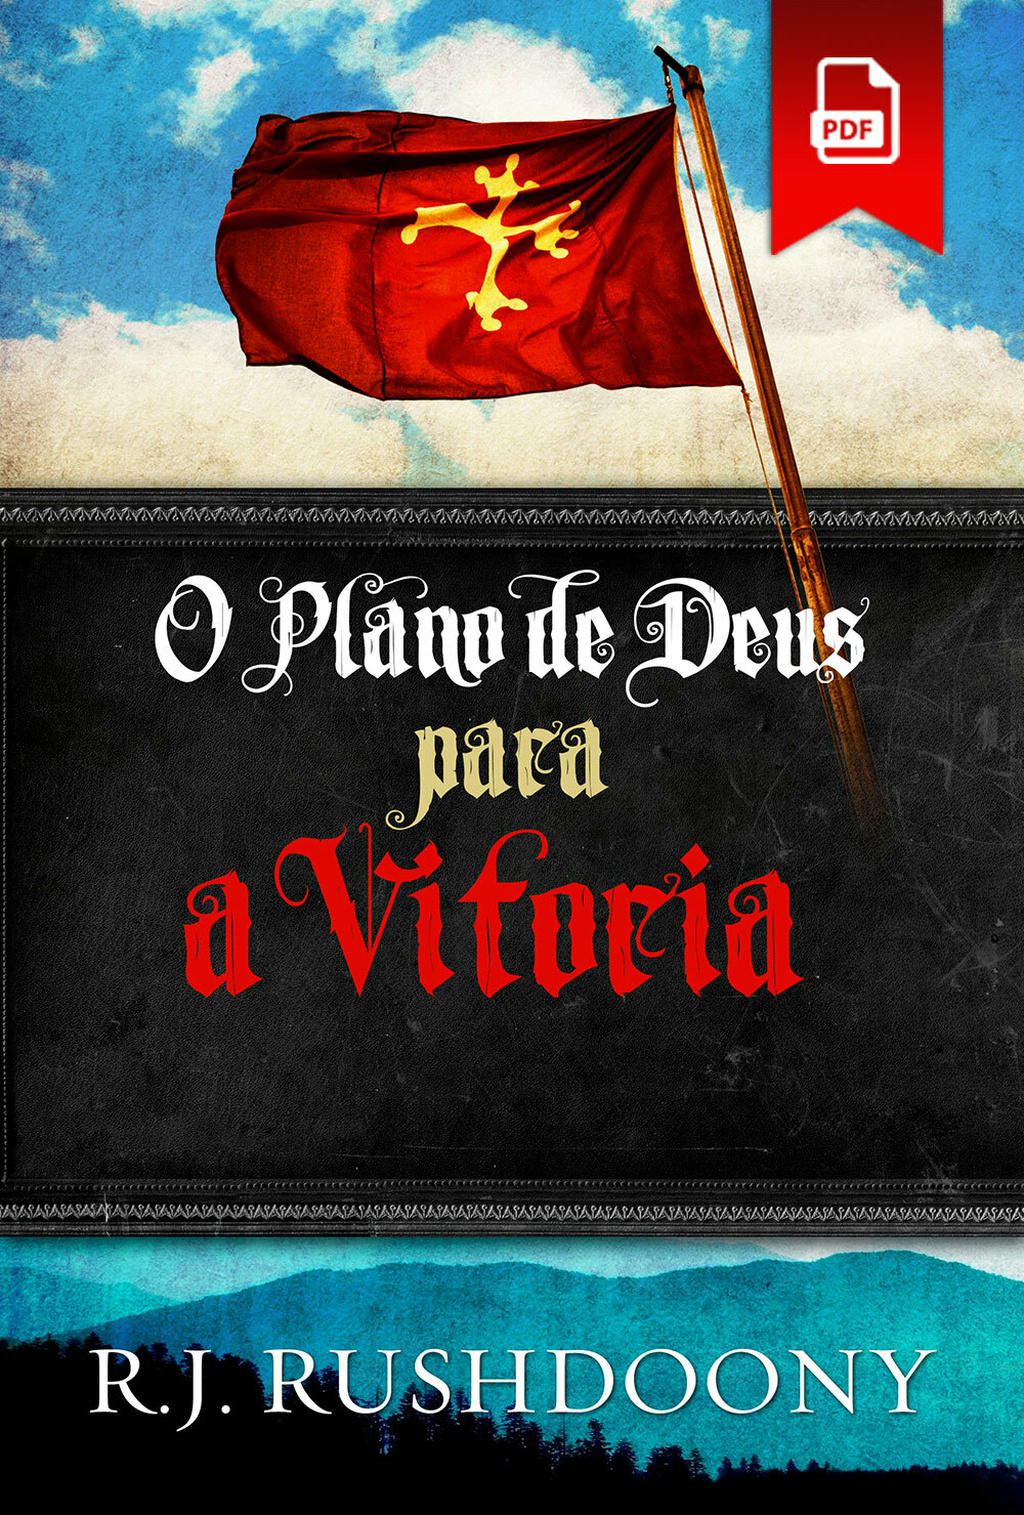 Gods Plan for Victory Portuguese pdf